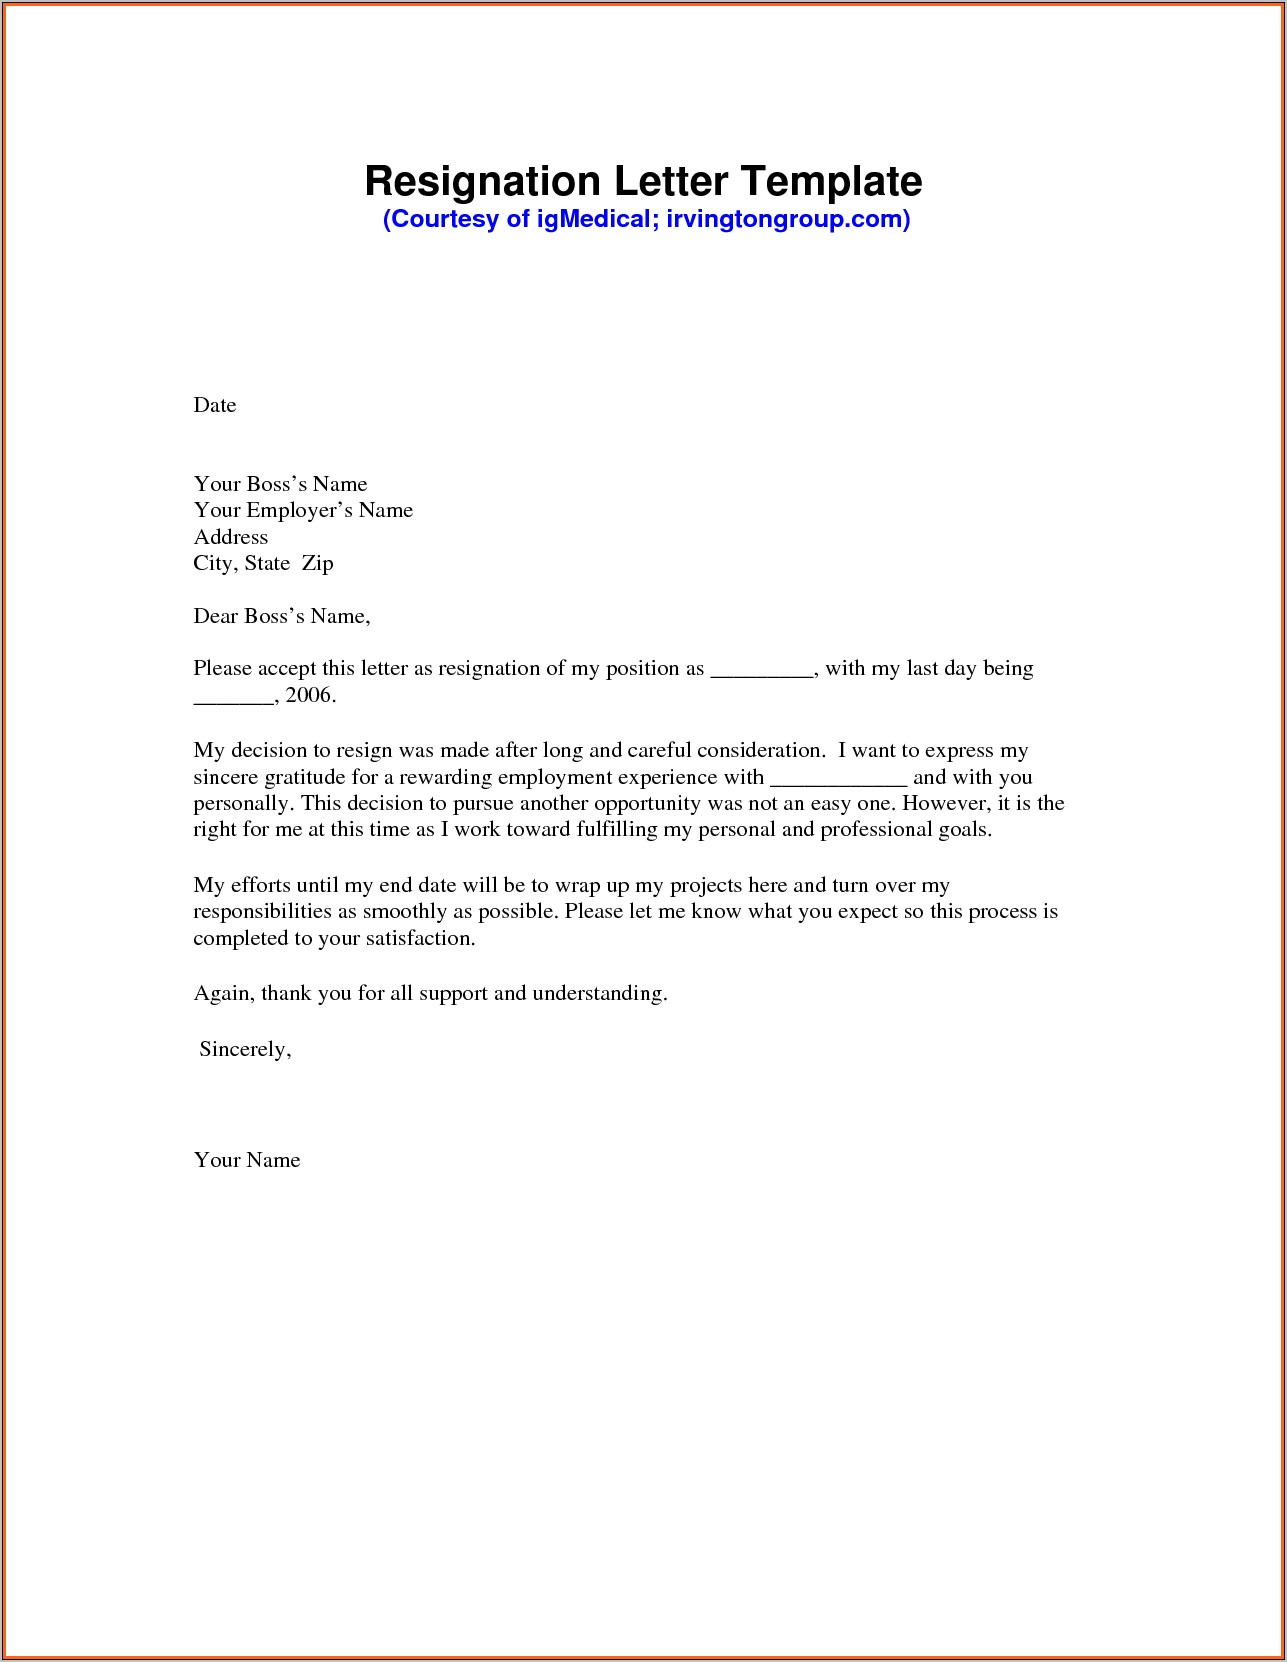 Template Resignation Letter Pdf